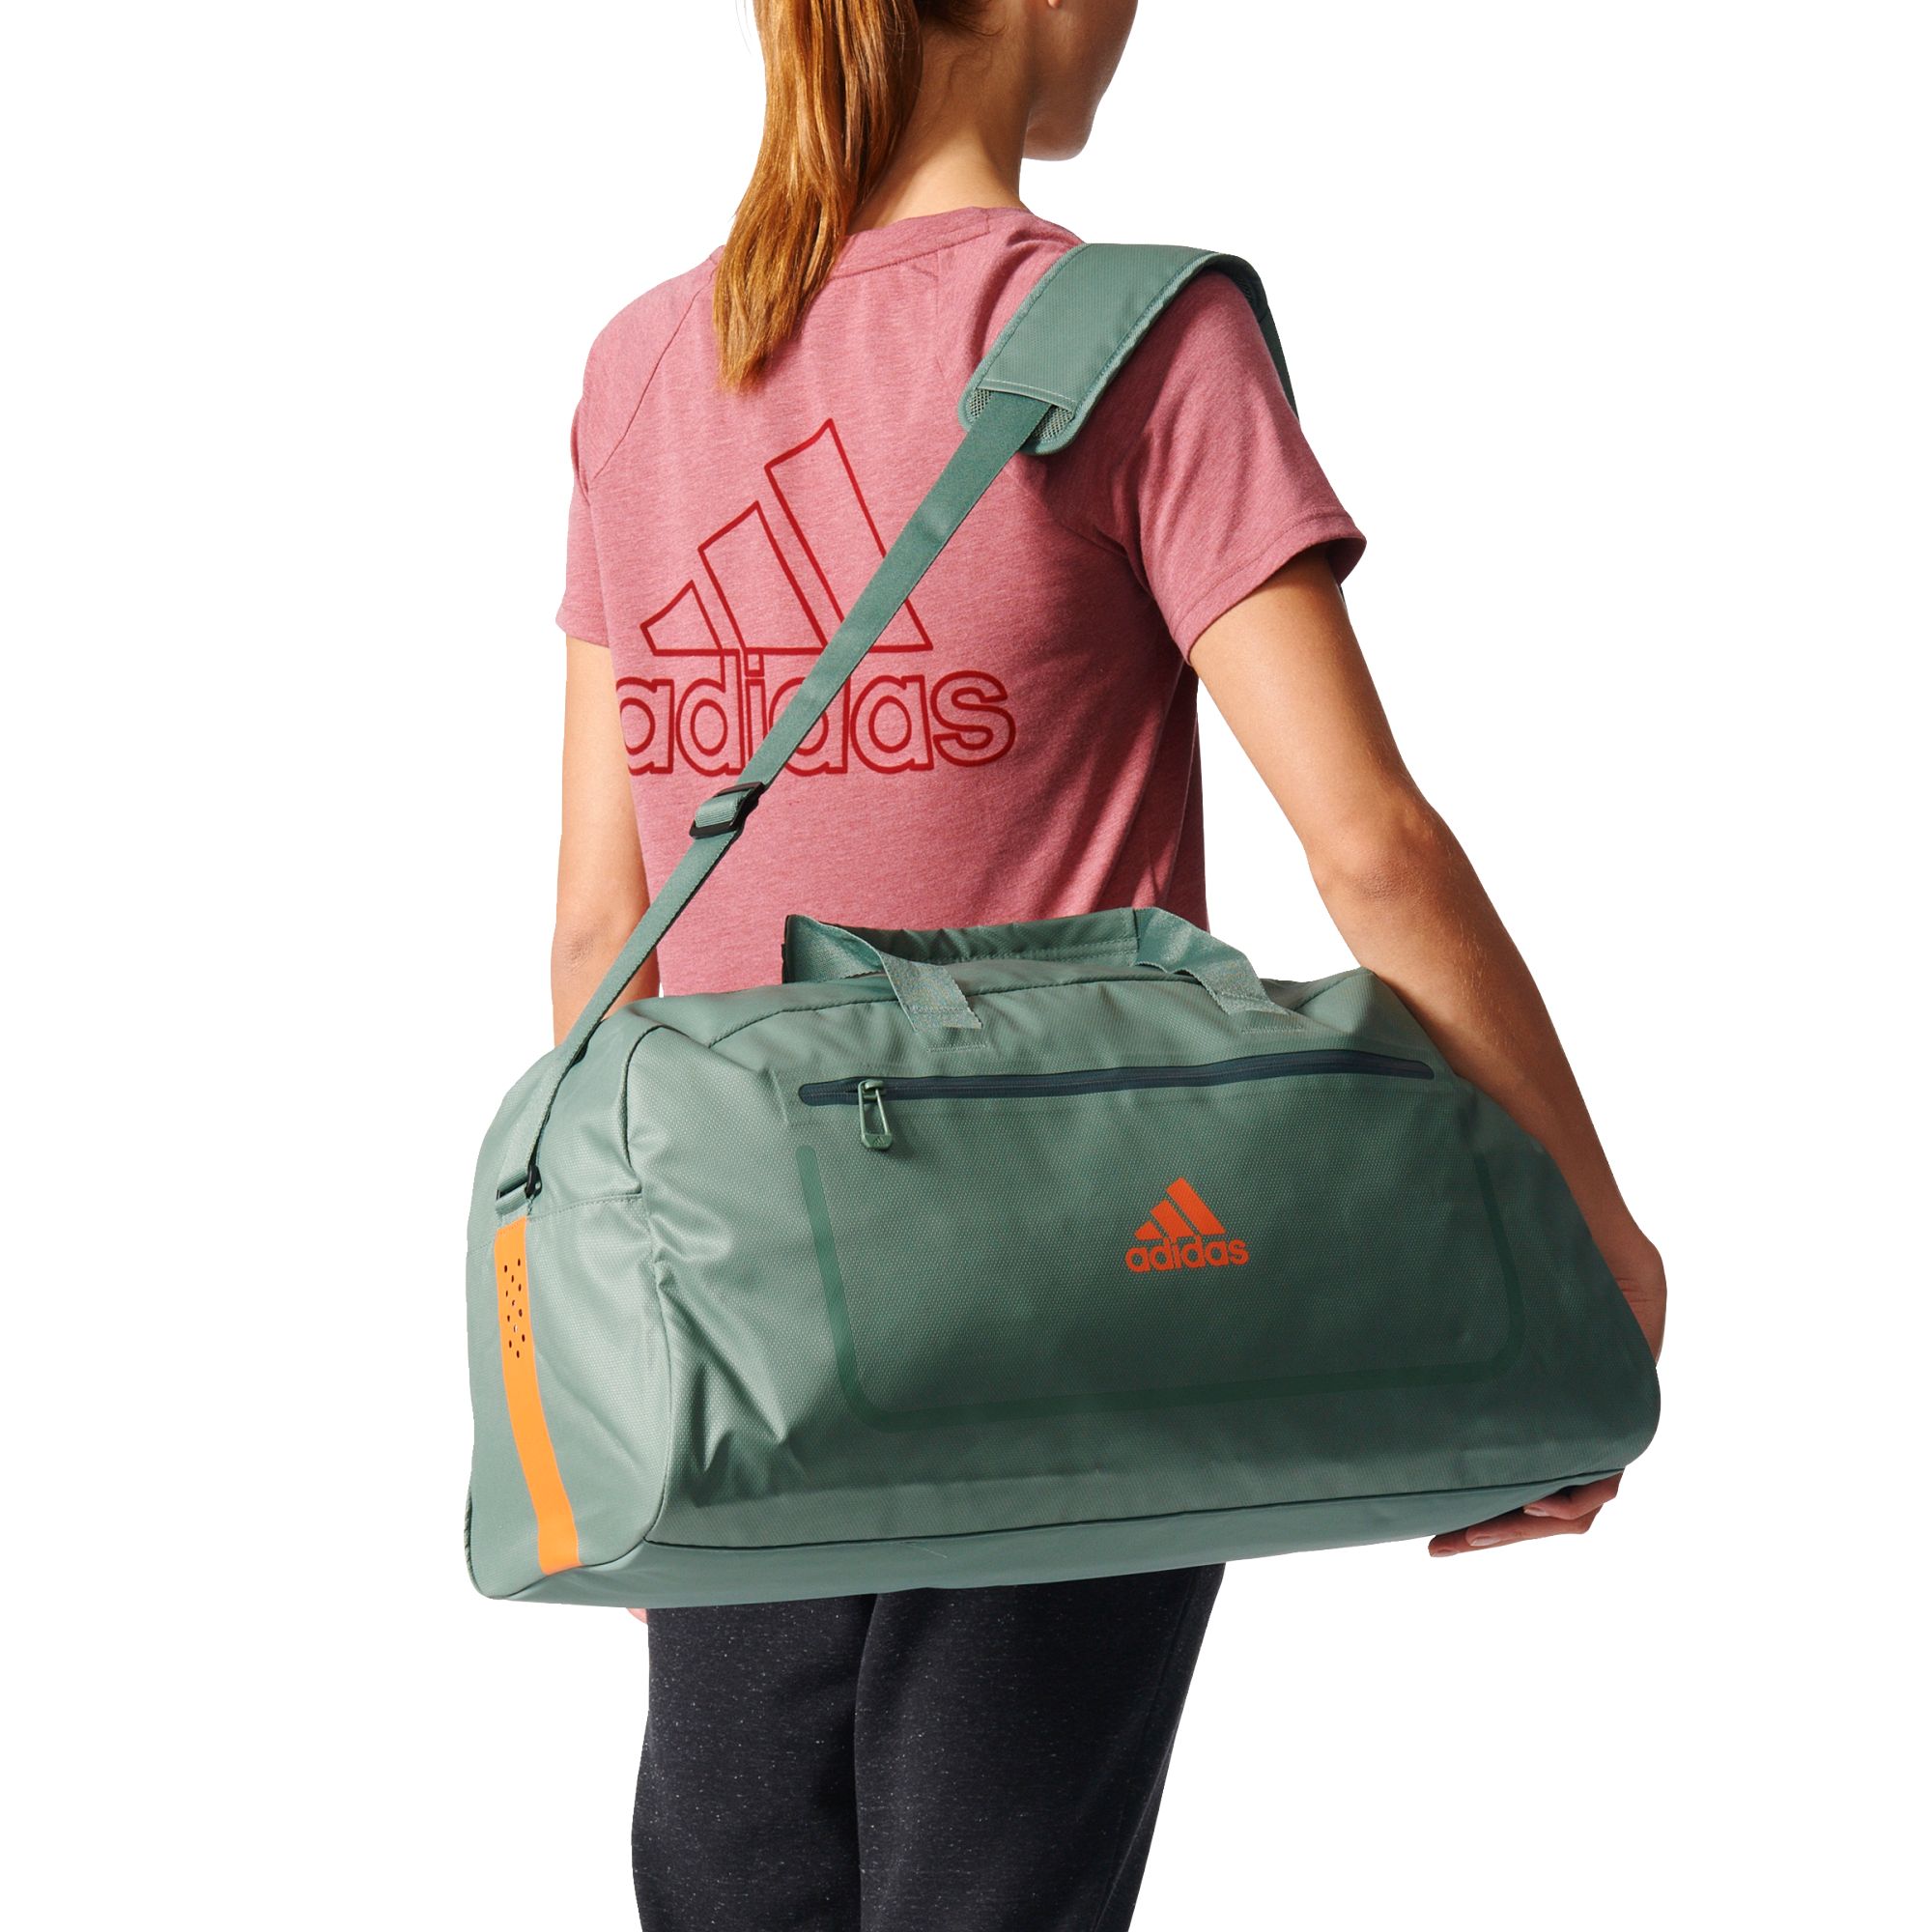 Adidas Climacool Teambag, Medium, Green at John Lewis \u0026 Partners